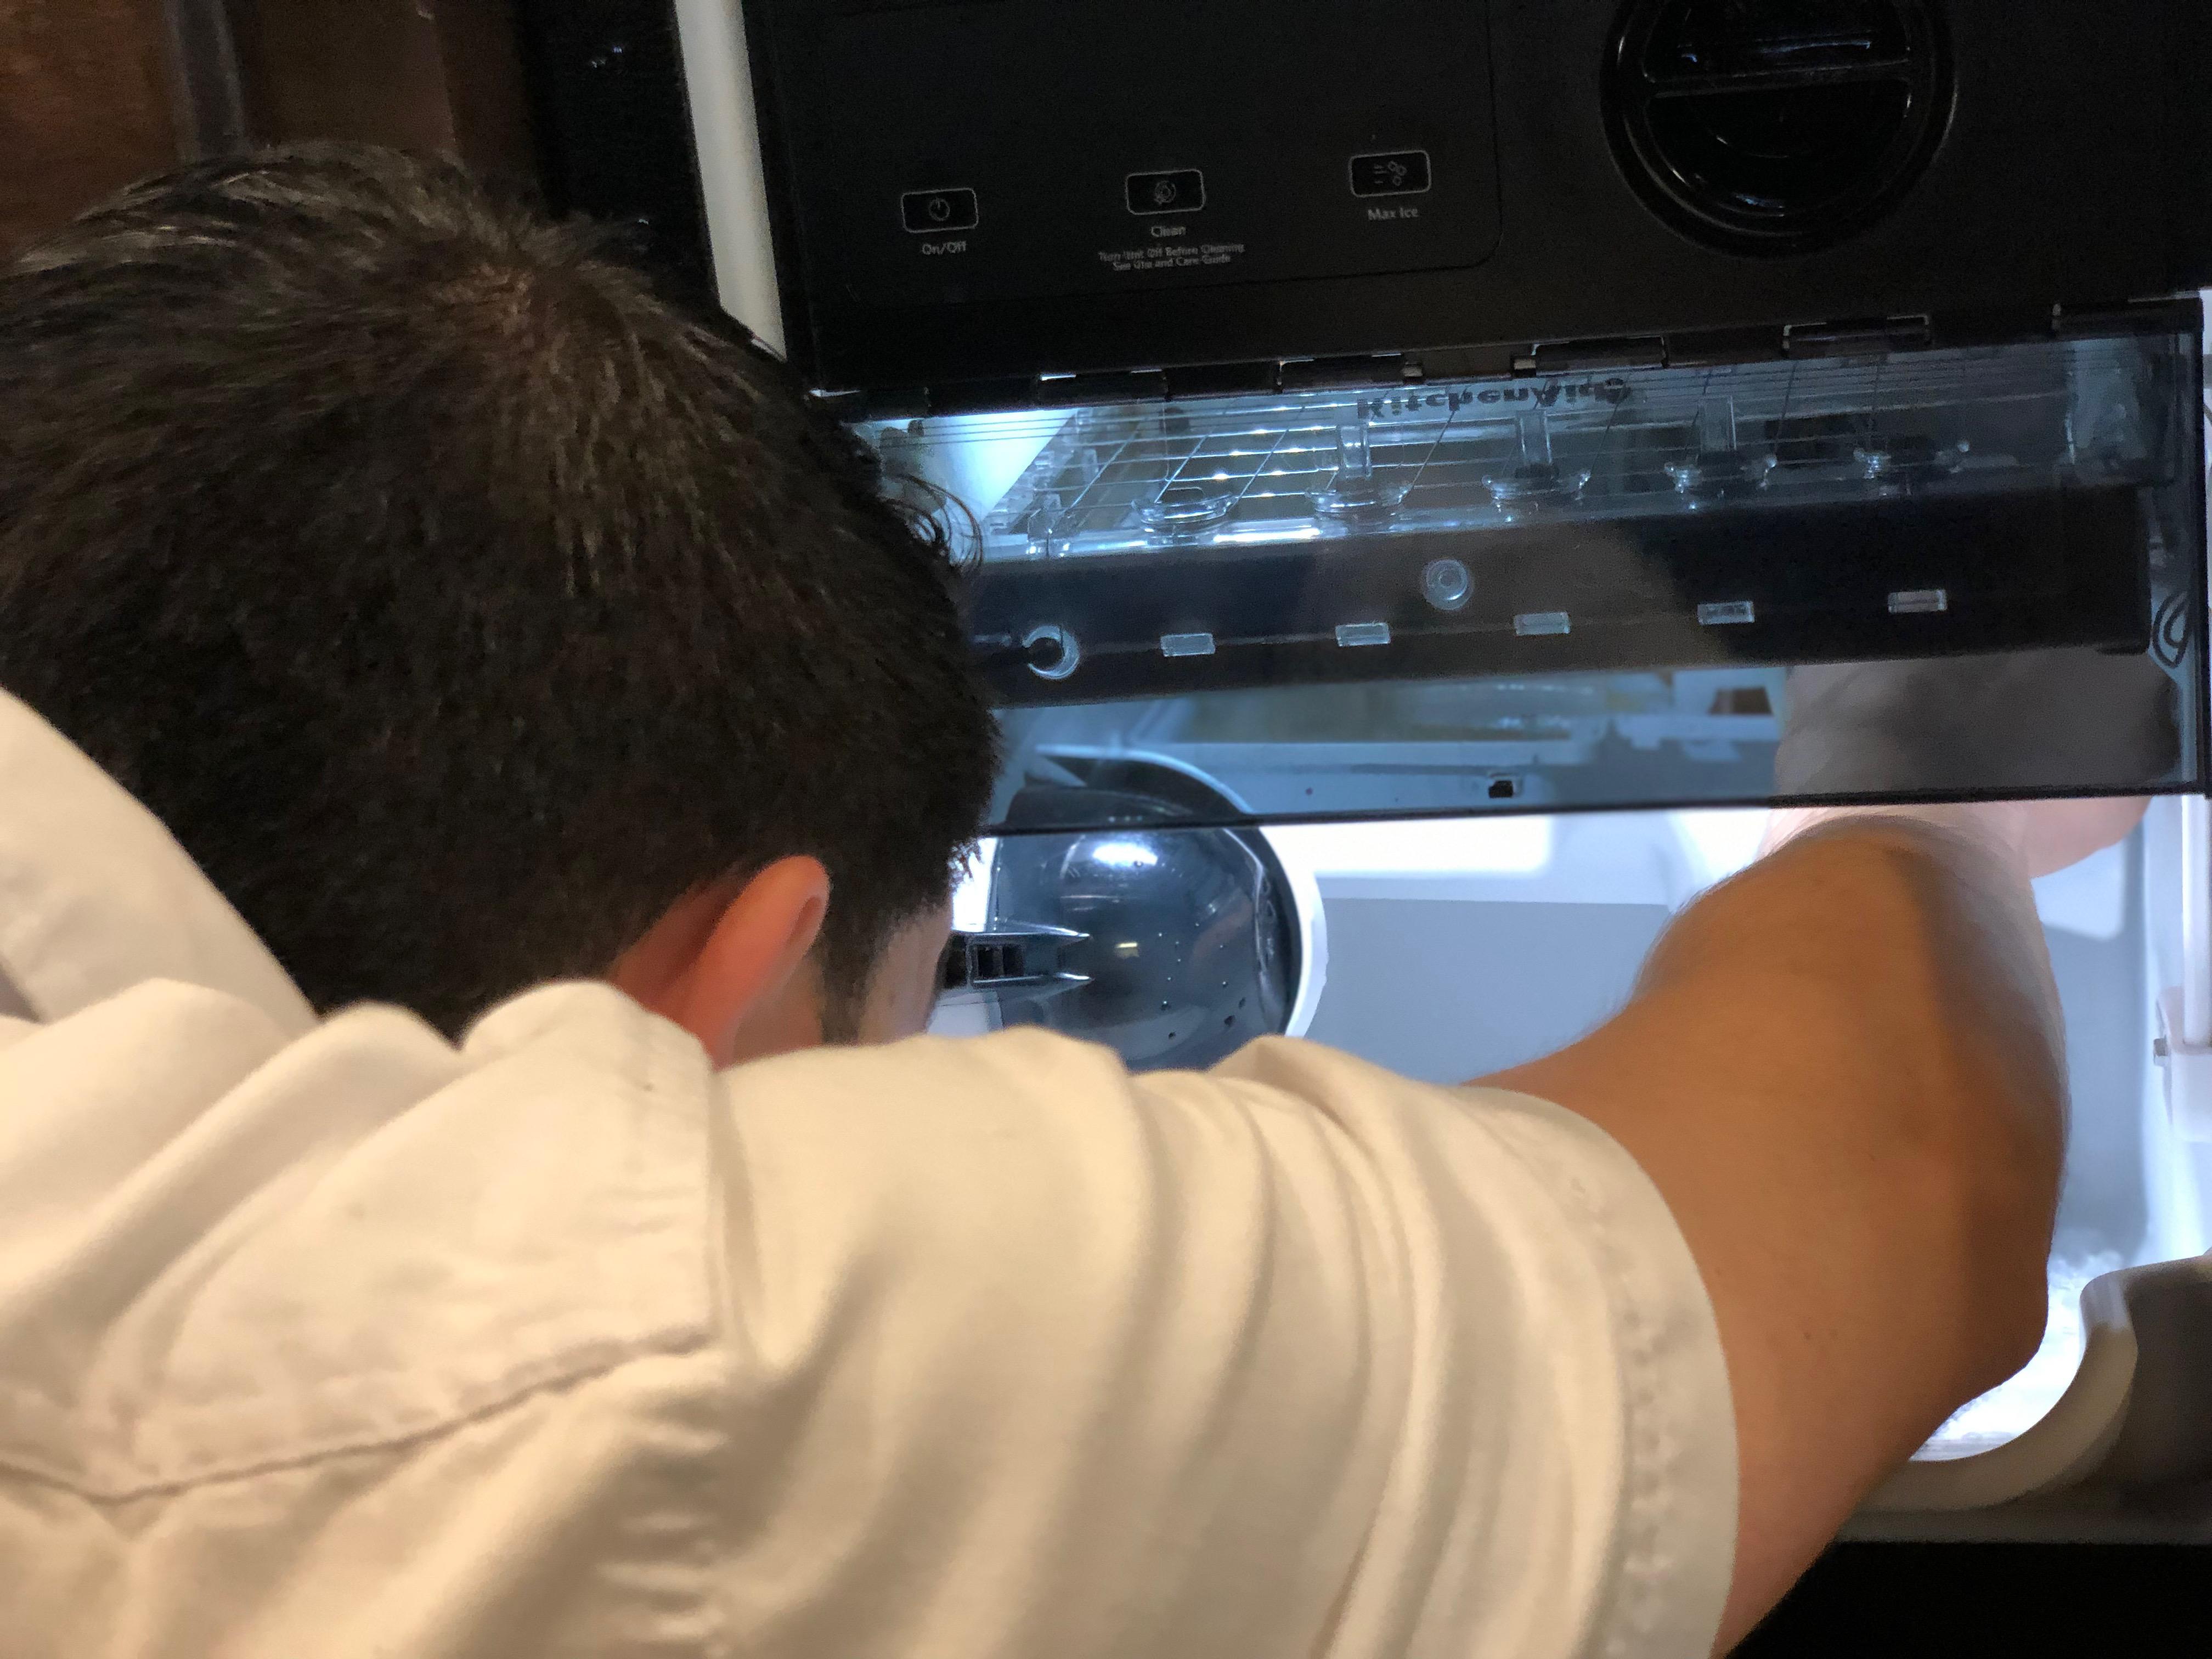 Ice Maker Repairs Guinco Service Appliance Repair Richland Hills (817)568-2866